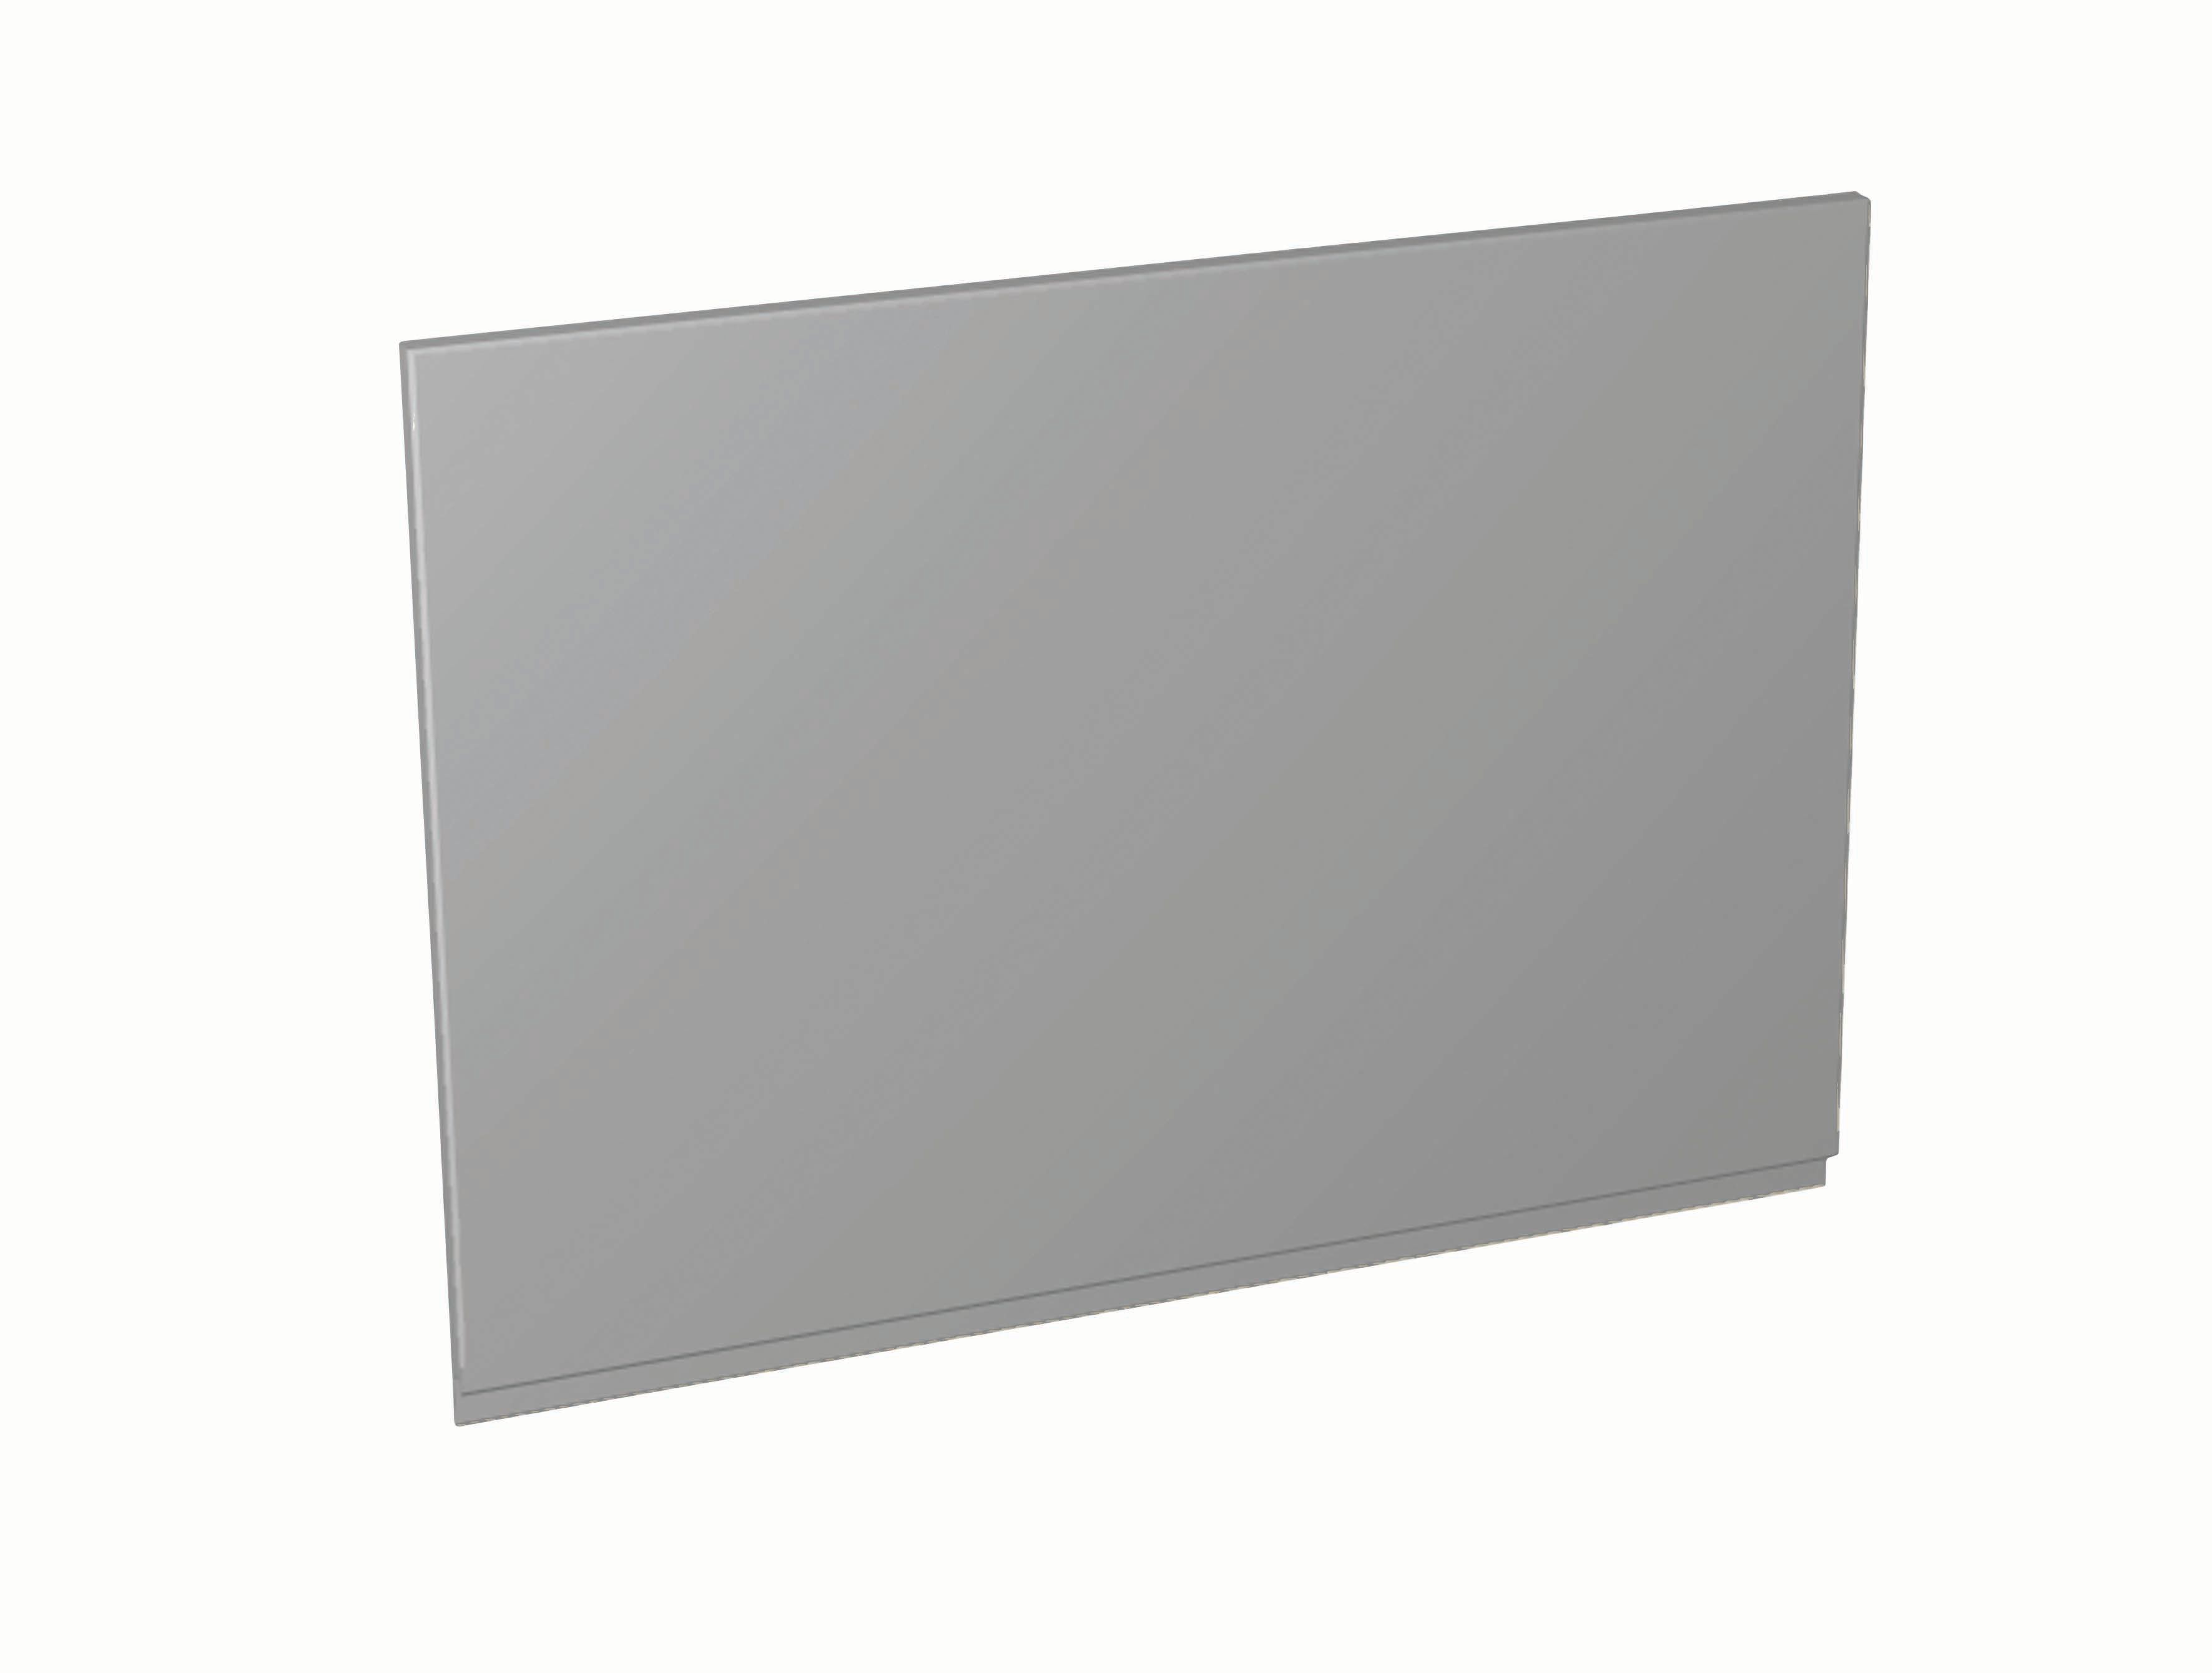 Wickes Madison Grey Gloss Handleless Appliance Door (D) - 600 x 437mm